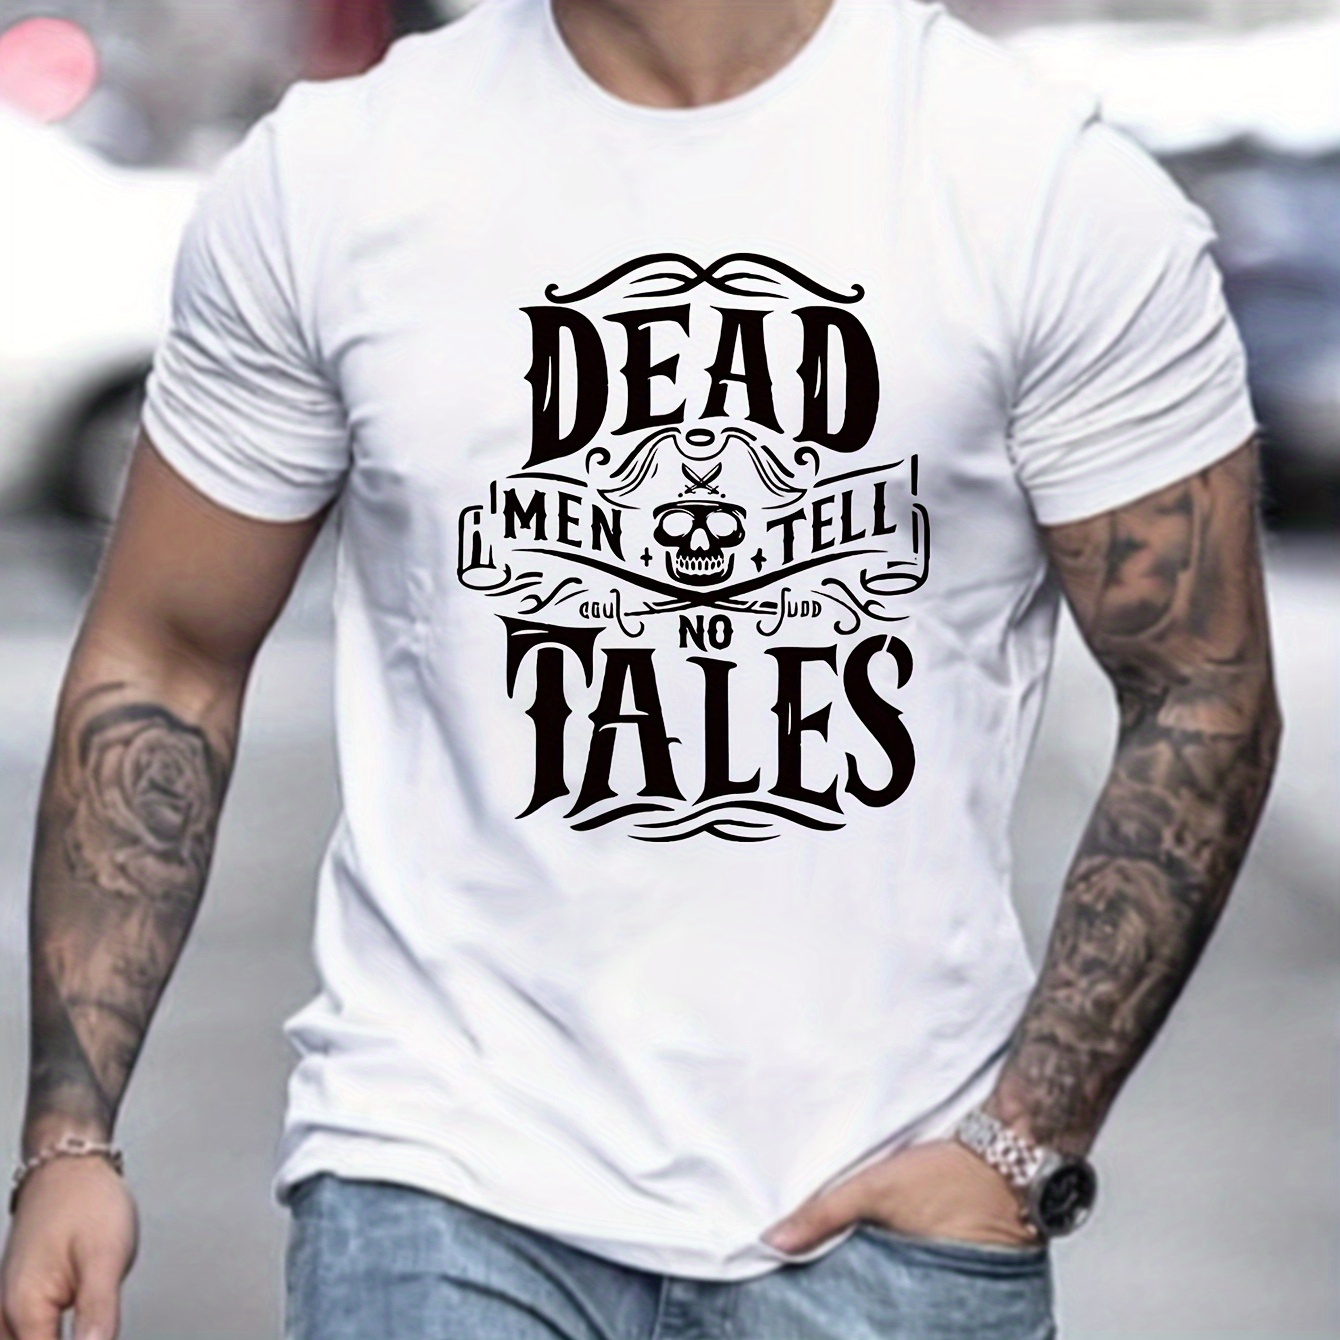 

1 Pc, 100% Cotton T-shirt, Crew Neck Dead Tales Print Men's Fashionable Summer Short Sleeve Sports T-shirt, Comfortable And Versatile